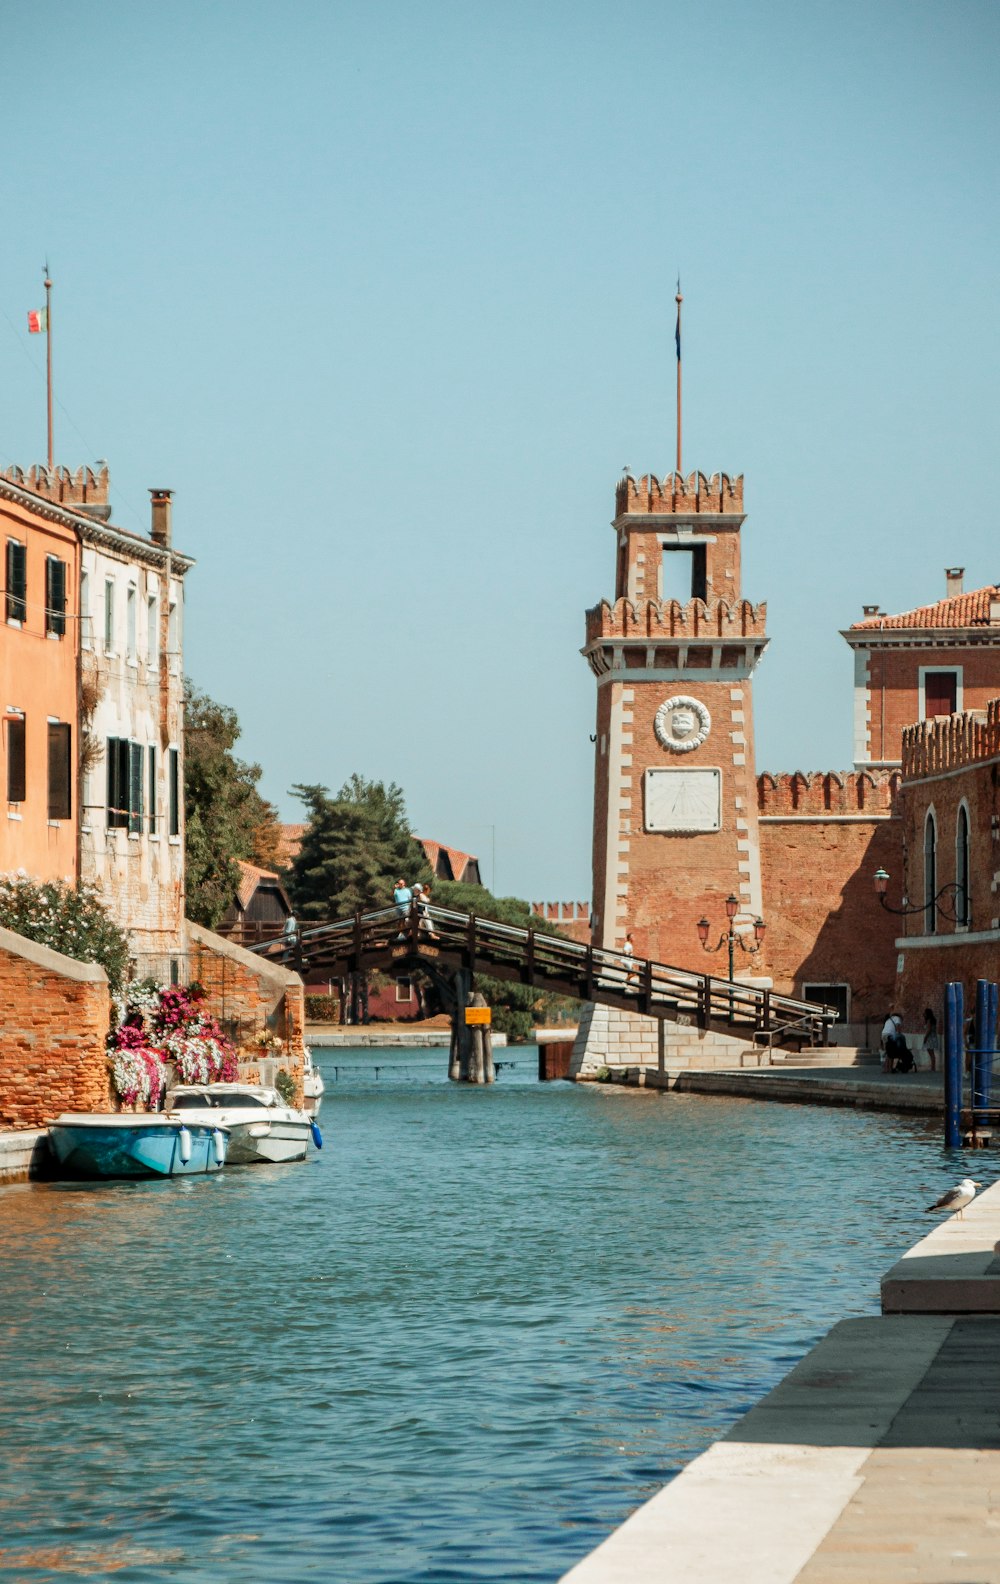 a clock tower on Venetian Arsenal